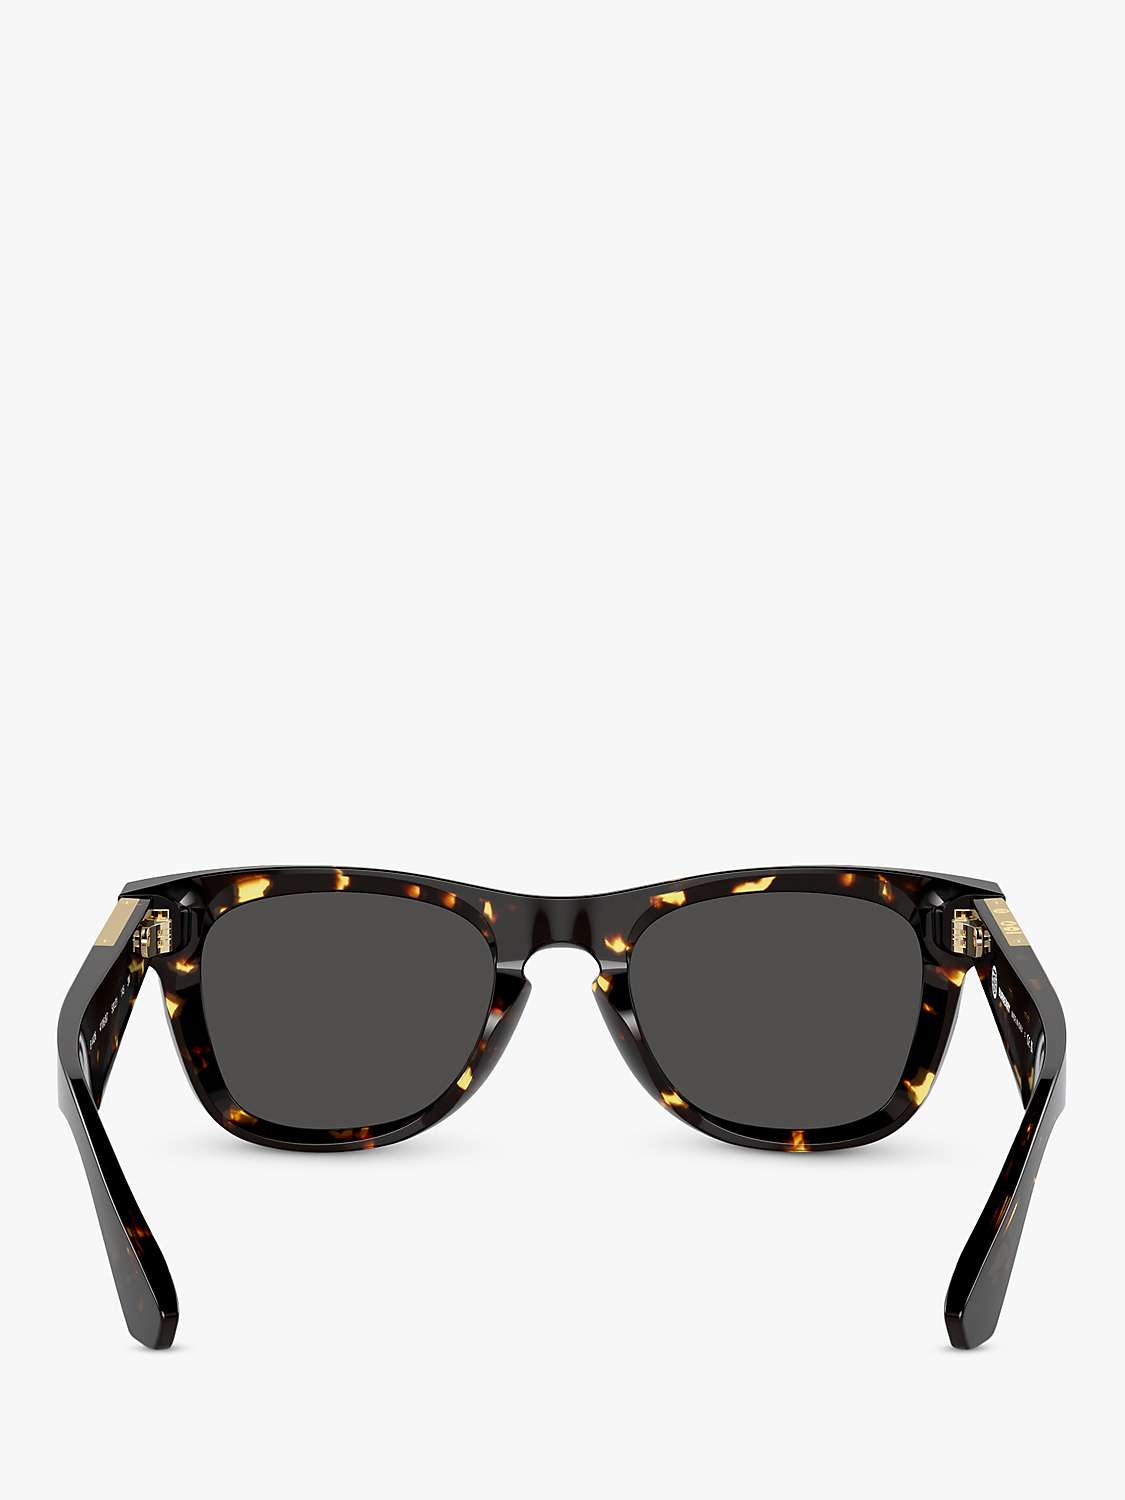 Buy Burberry BE4426 Men's D-Frame Sunglasses, Dark Havana/Grey Online at johnlewis.com